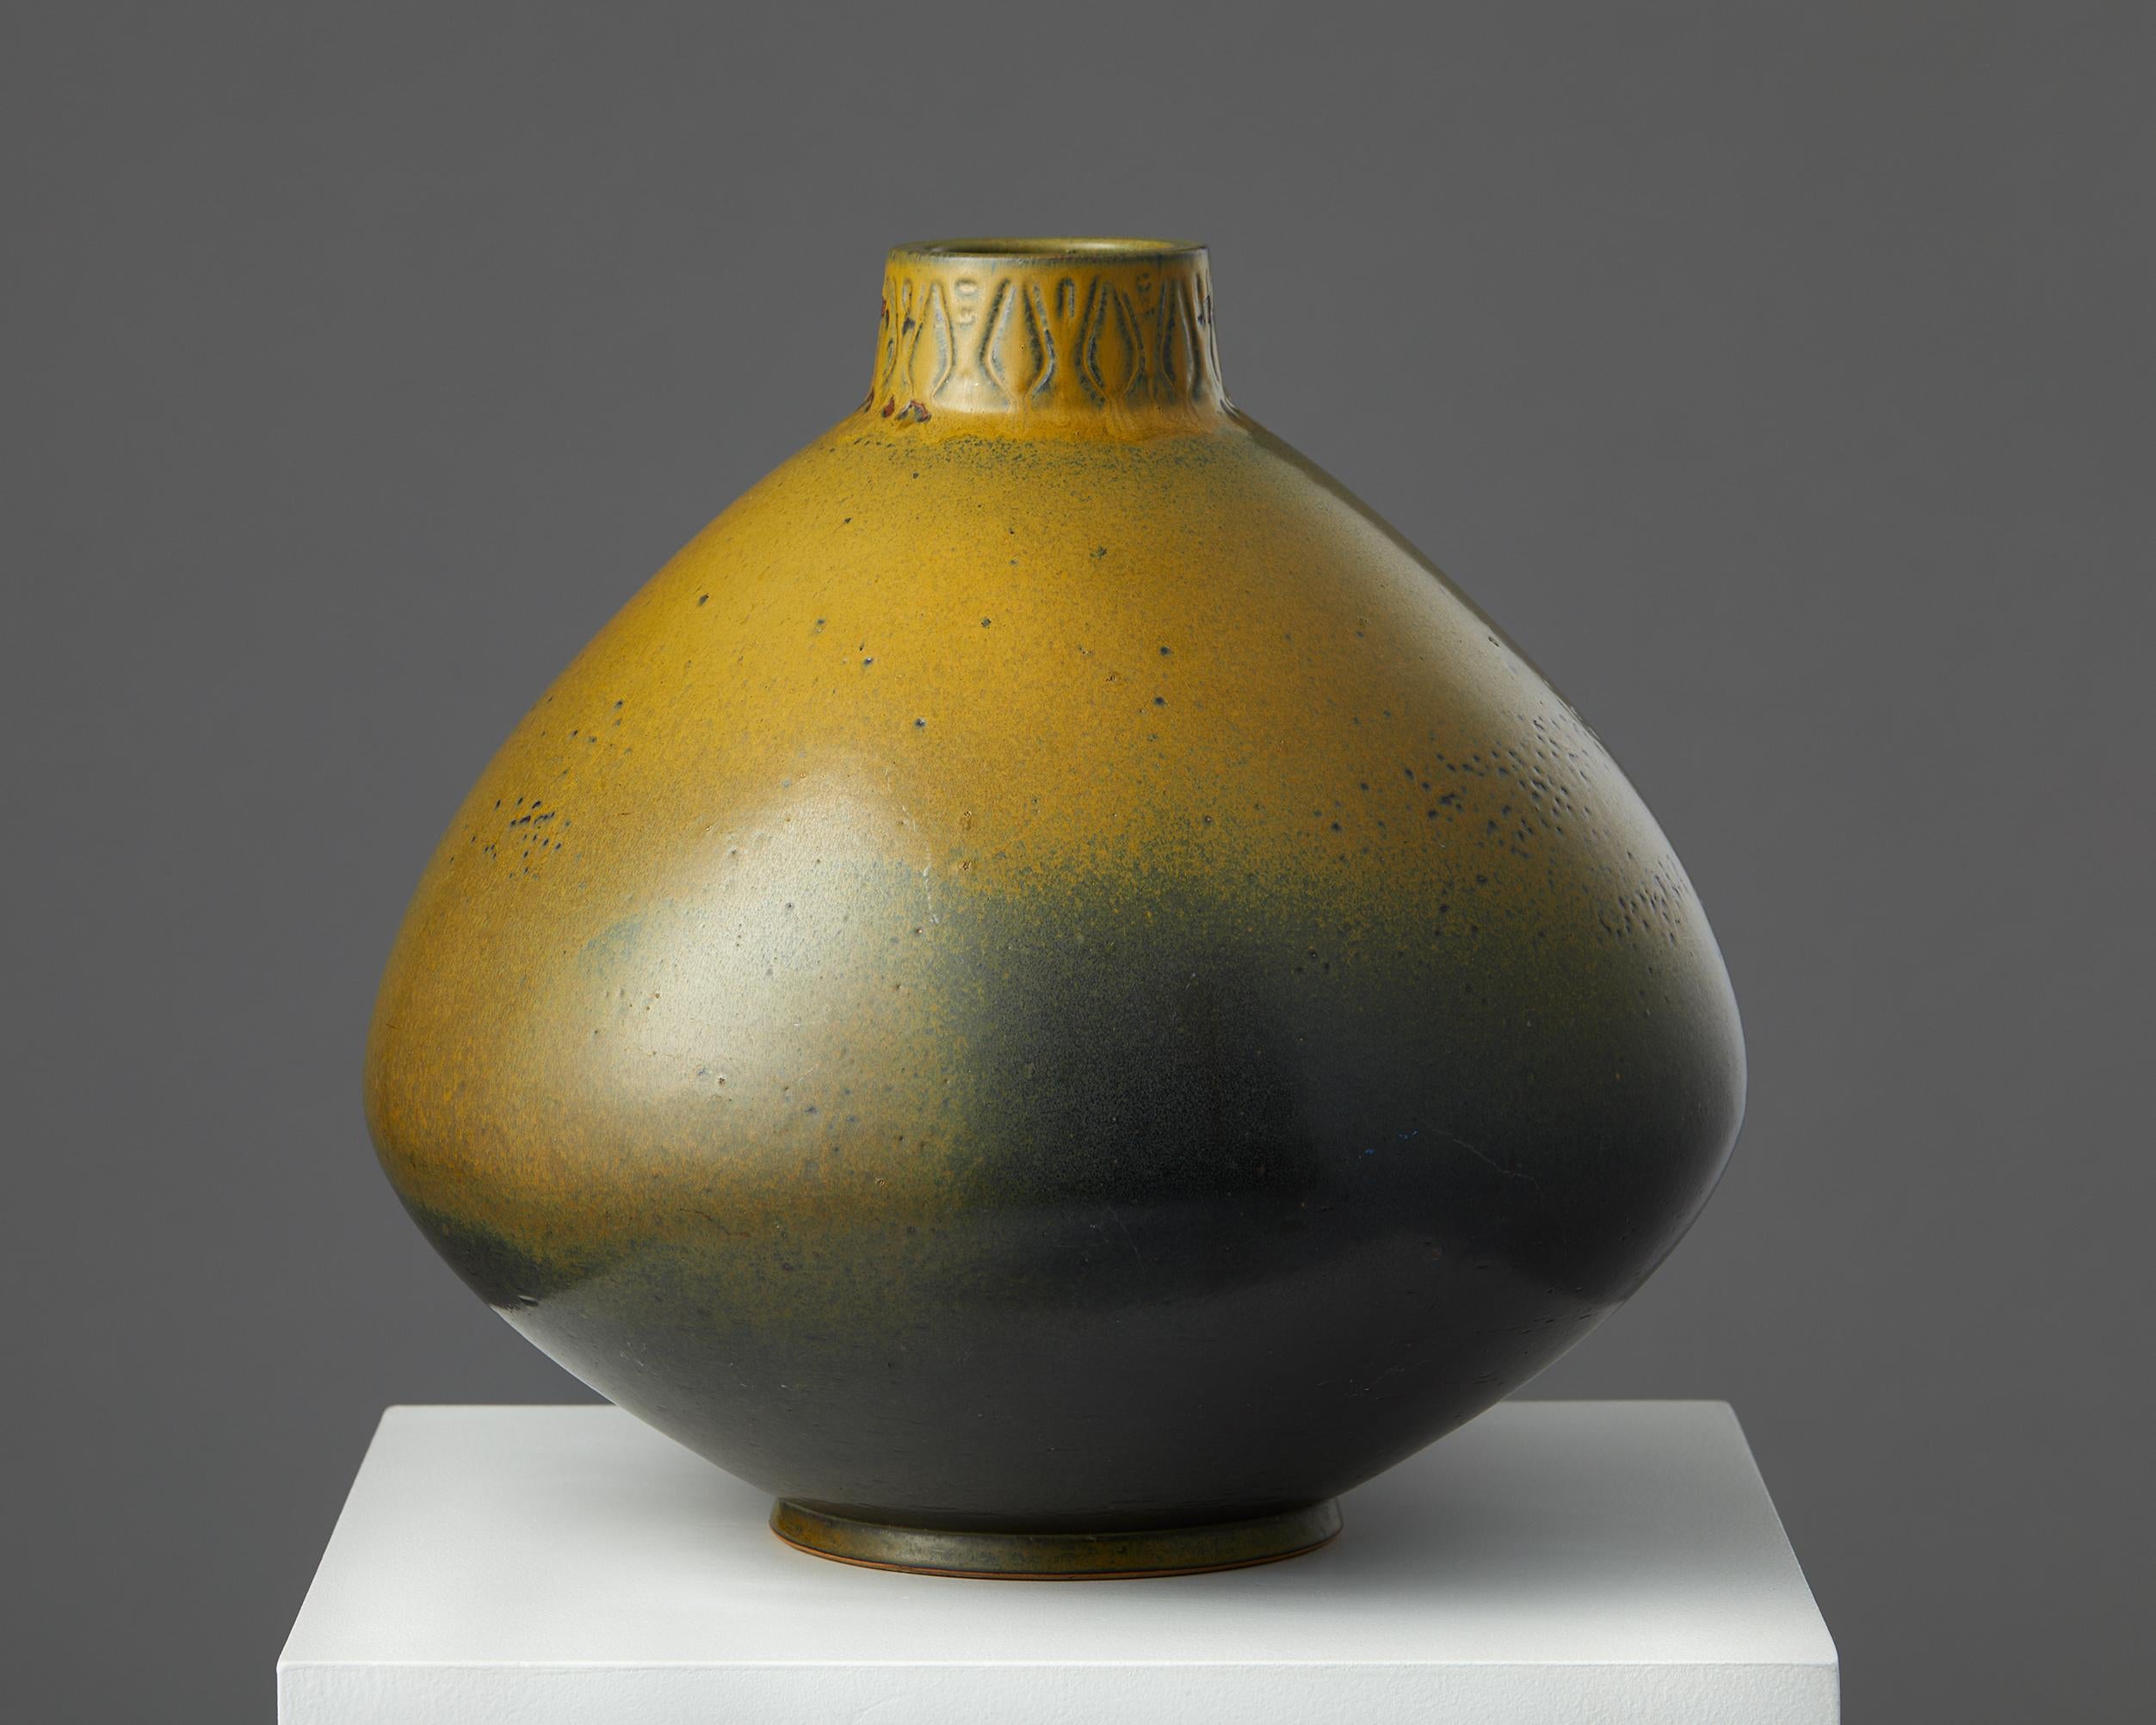 Vase designed by Yngve Blixt,
Sweden. 1955.

Stoneware.

Signed.

Dimensions:
Height: 33 cm / 13